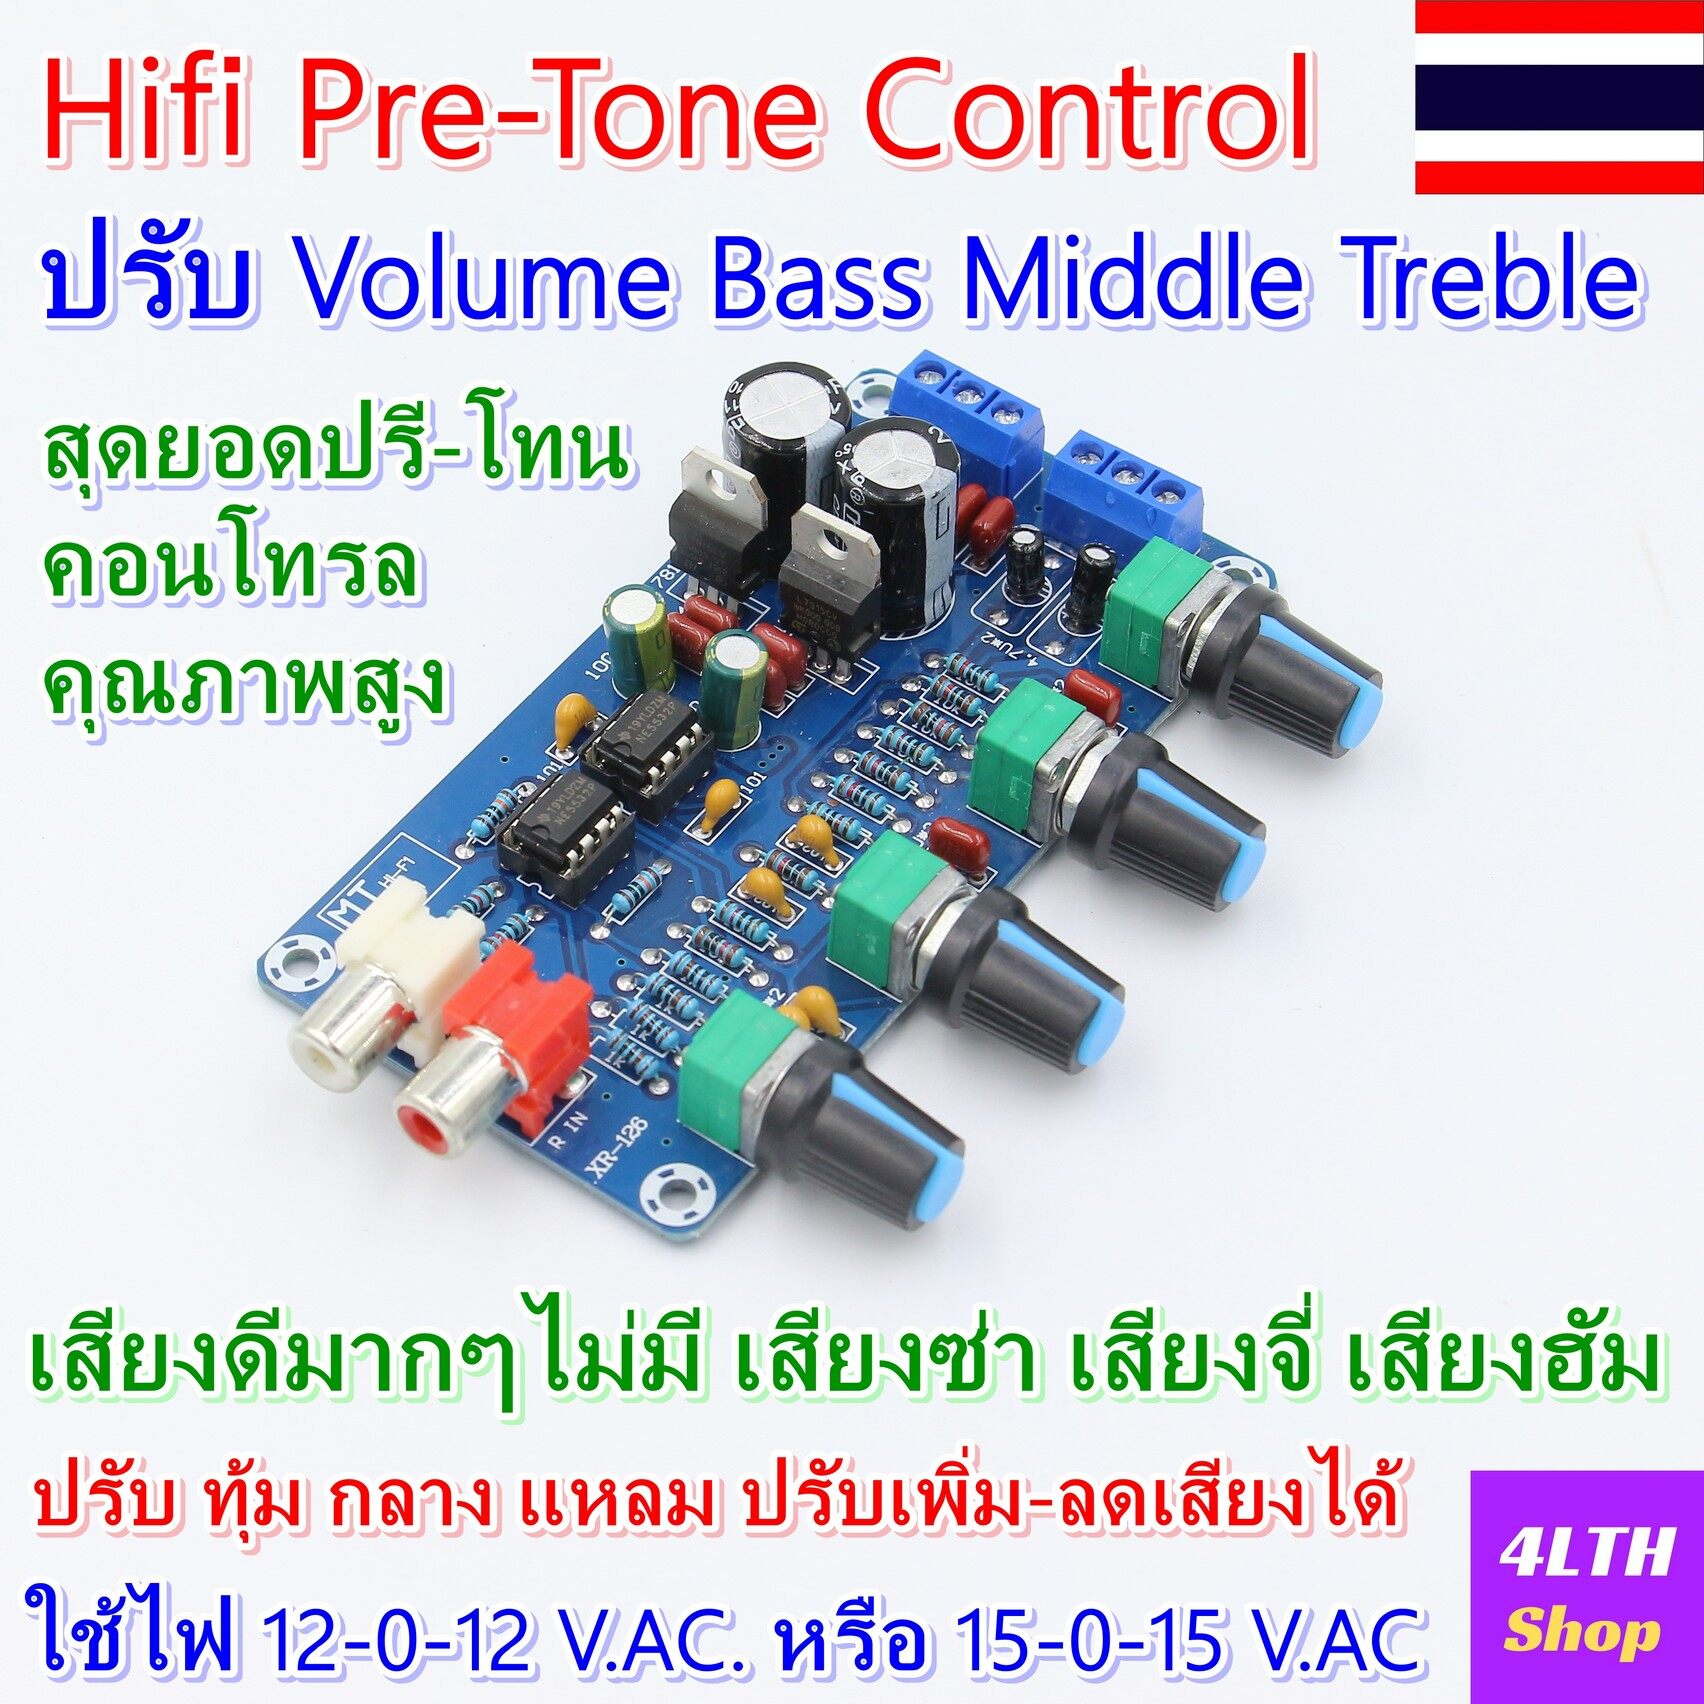 Pre-Tone control Volume Bass Middle Treble รุ่นใช้ไฟ 12-0-12 Volt AC. หรือ 15-0-15 Volt AC. ใช้ IC Op-amp Low Noise เบอร์ NE5532  2 ตัว เสียงดีมากๆ ปรับเสียงทุ้ม กลาง แหลม ได้